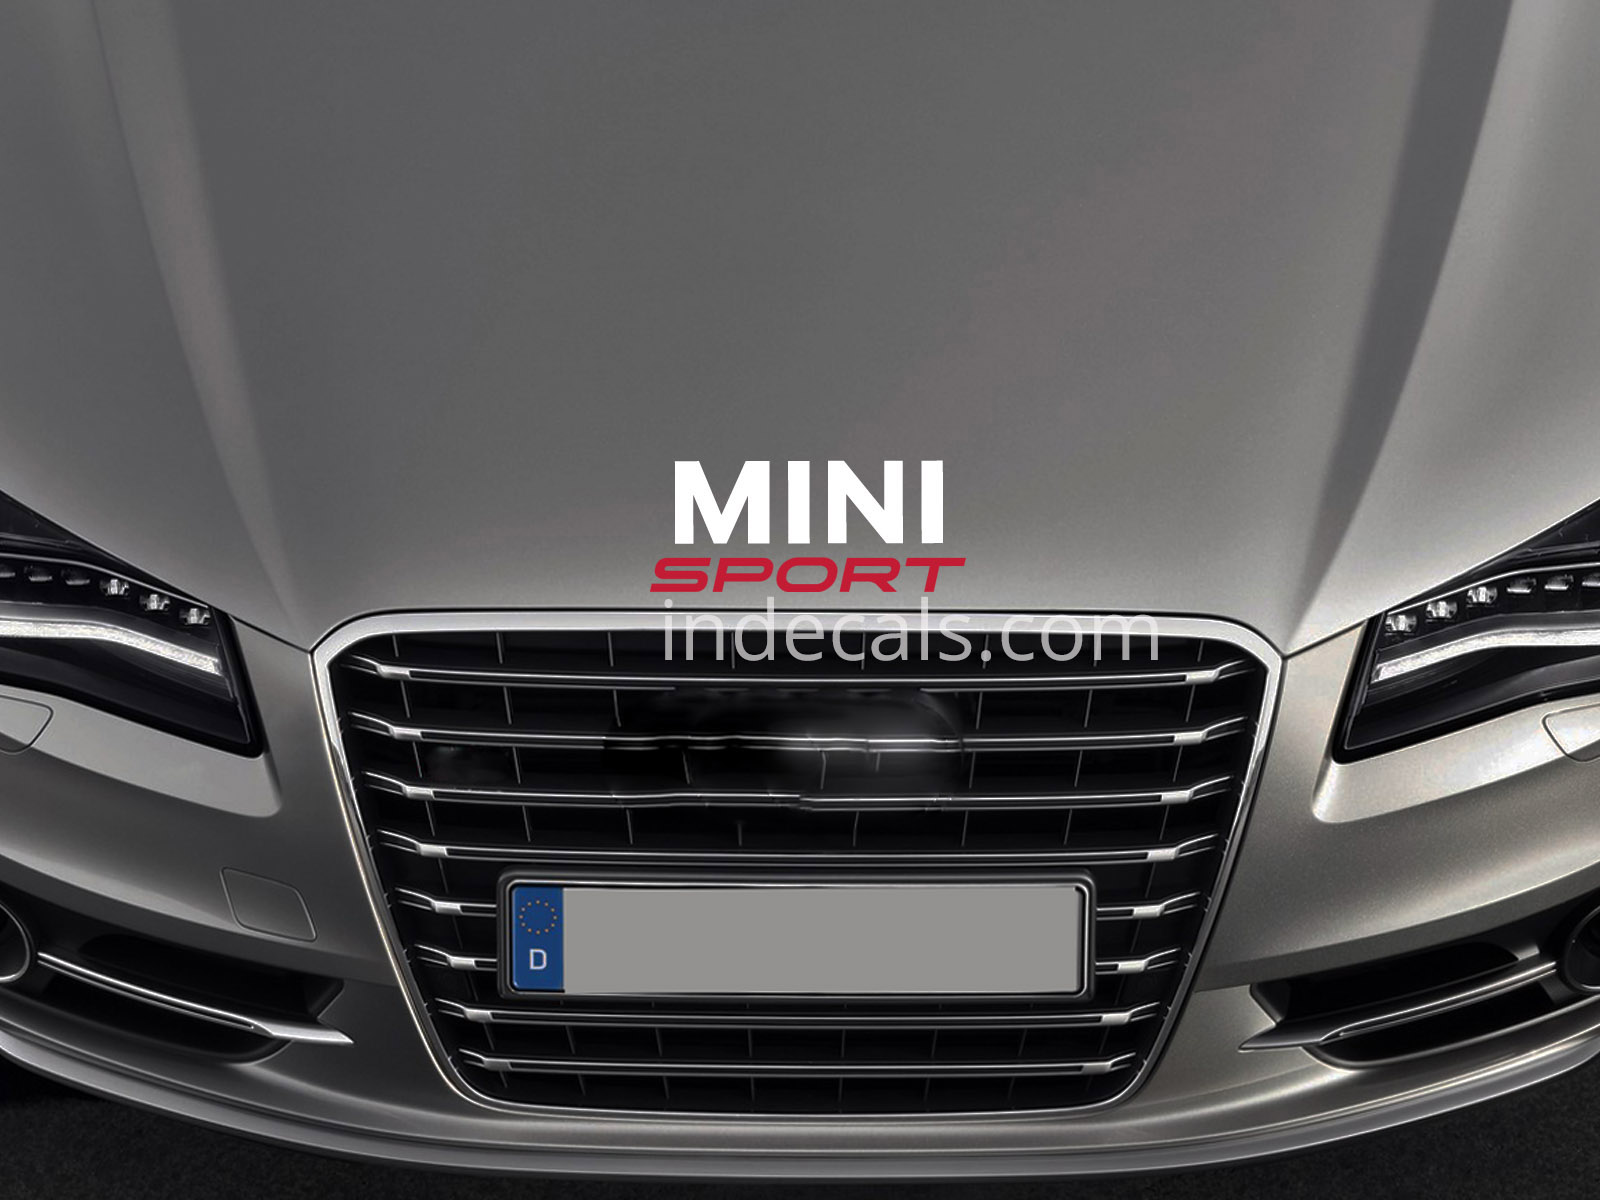 1 x Mini Sport Sticker for Bonnet - White & Red